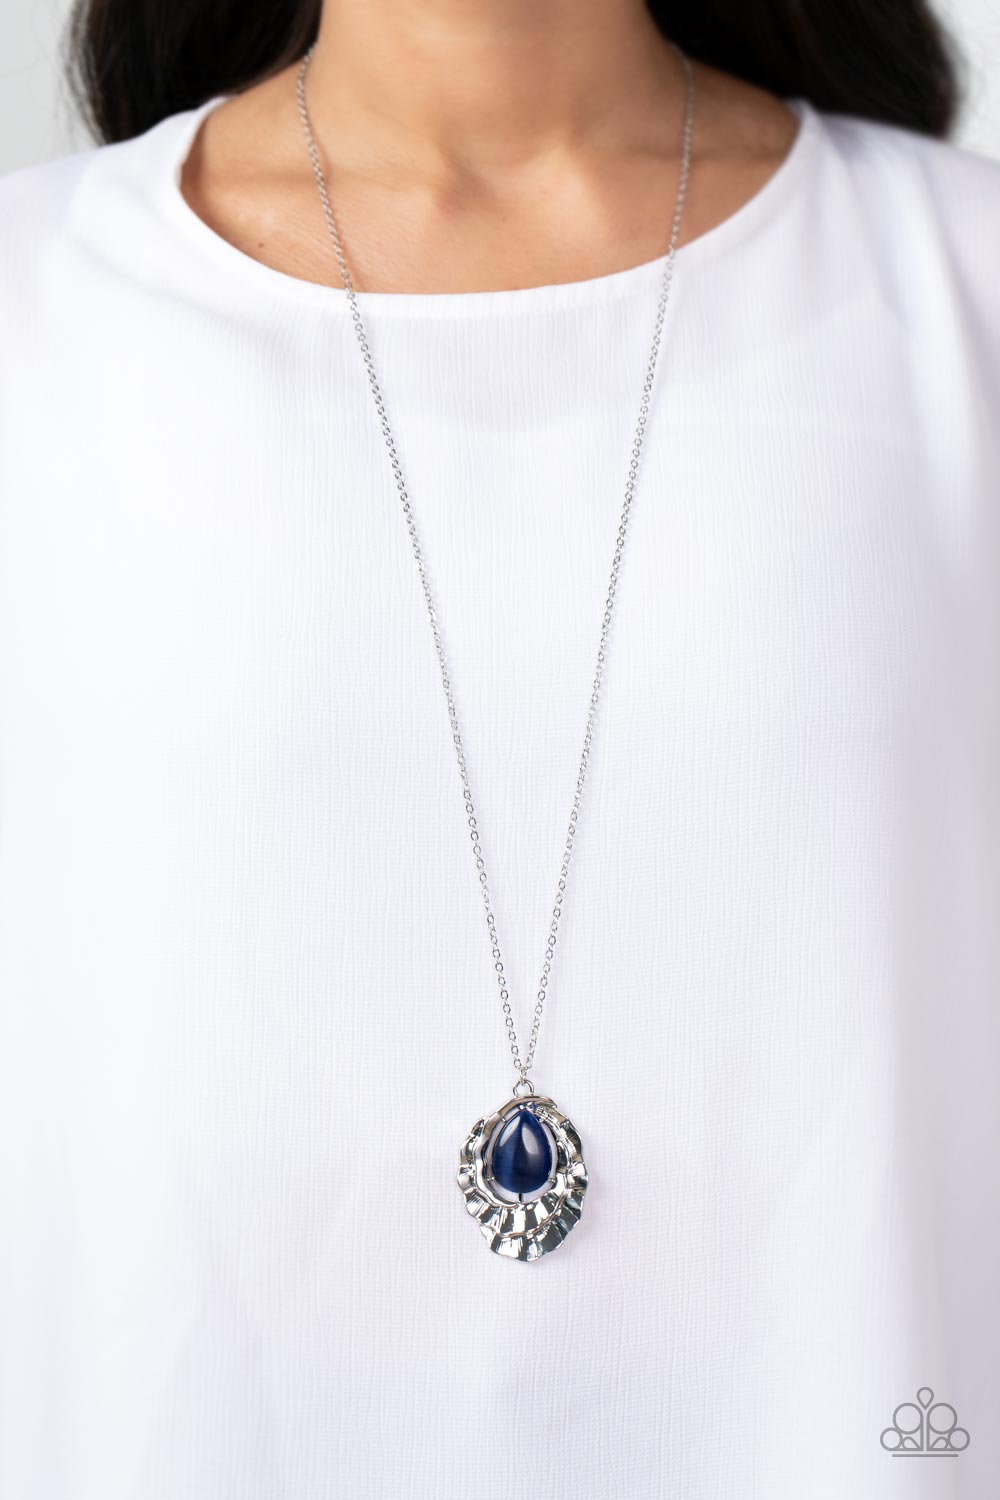 Titanic Trinket - Blue Cat's Eye/Scalloped Silver Frame Pendant Paparazzi Necklace & matching earrings